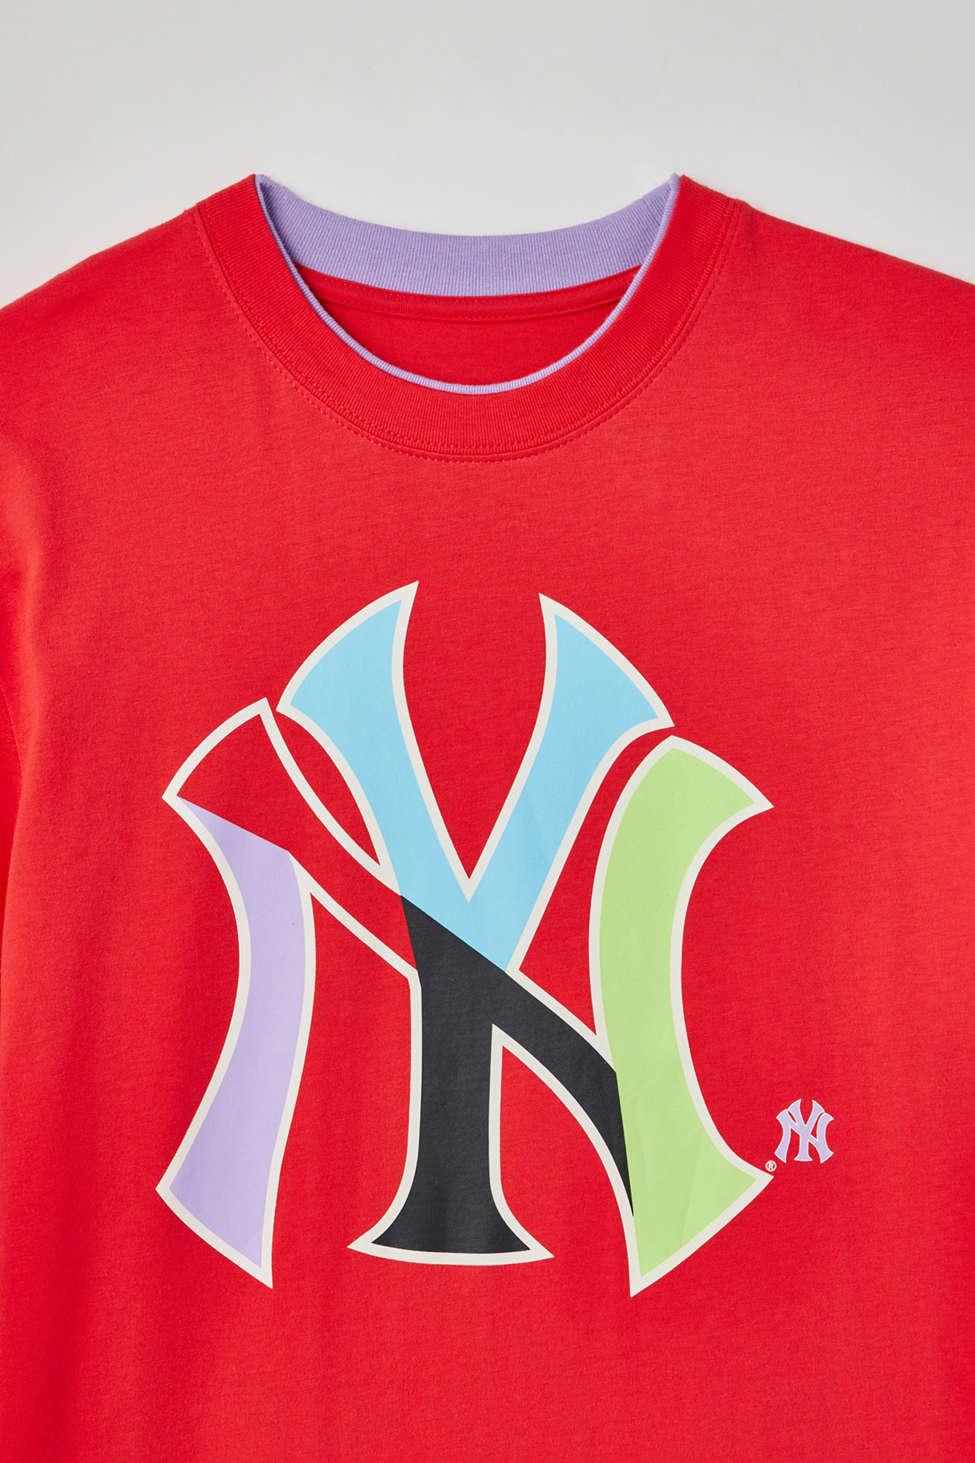 KTZ New York Yankees Colorpack Pinkblock Tee in Red for Men